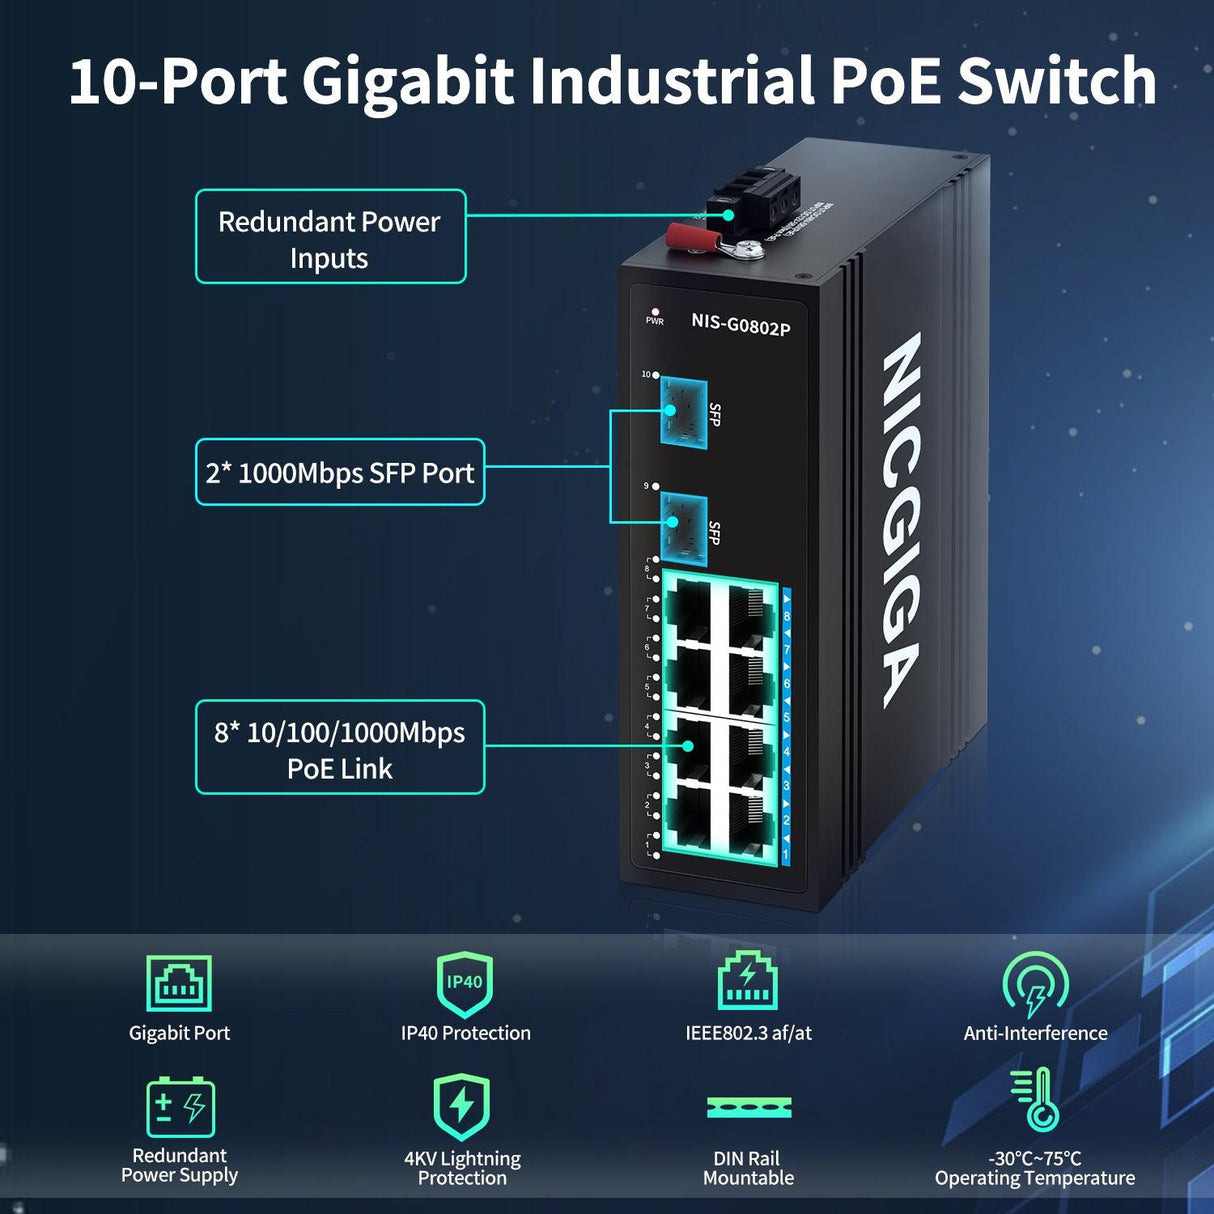 NICGIGA 8 Port Industrial Gigabit PoE Ethernet DIN-Rail Switch, with 8 x 30W PoE Ports @245W + 2 SFP Uplink Network Switch. IP40 Metal Enclosure(-30° to 75°) - NICGIGA